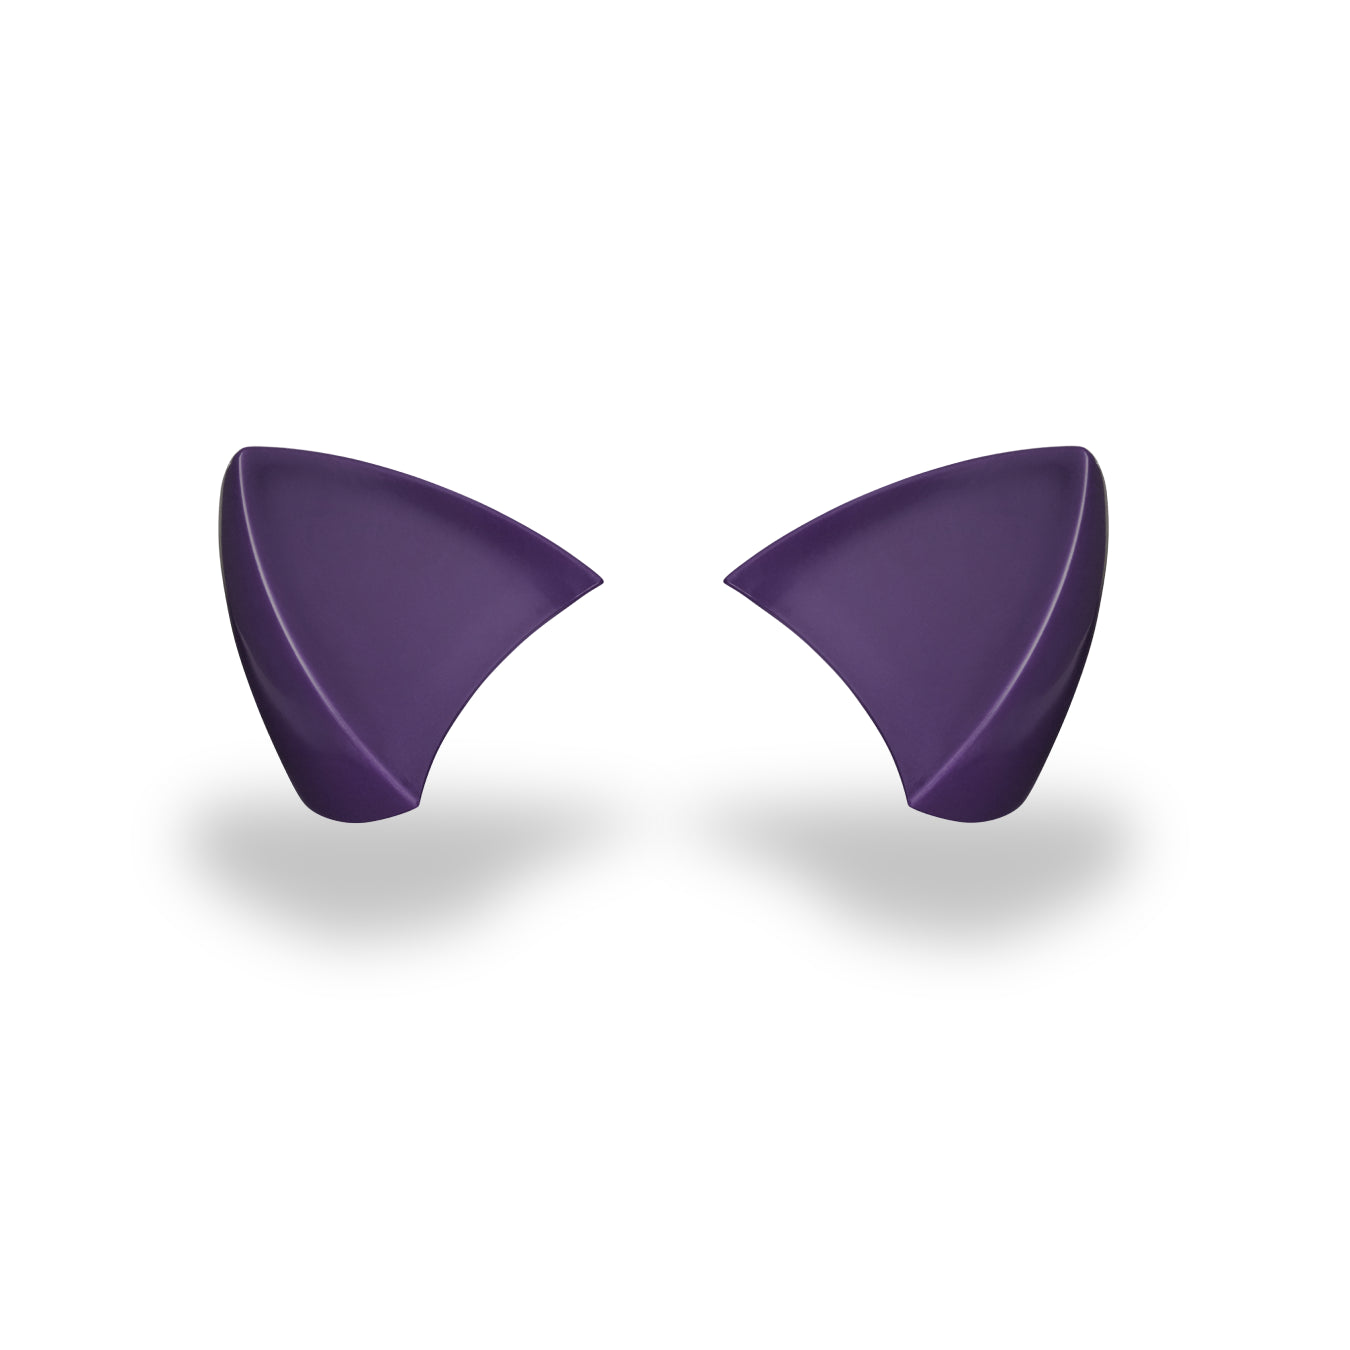 Cat Ears Purple - Motorcycle Helmet Accessory